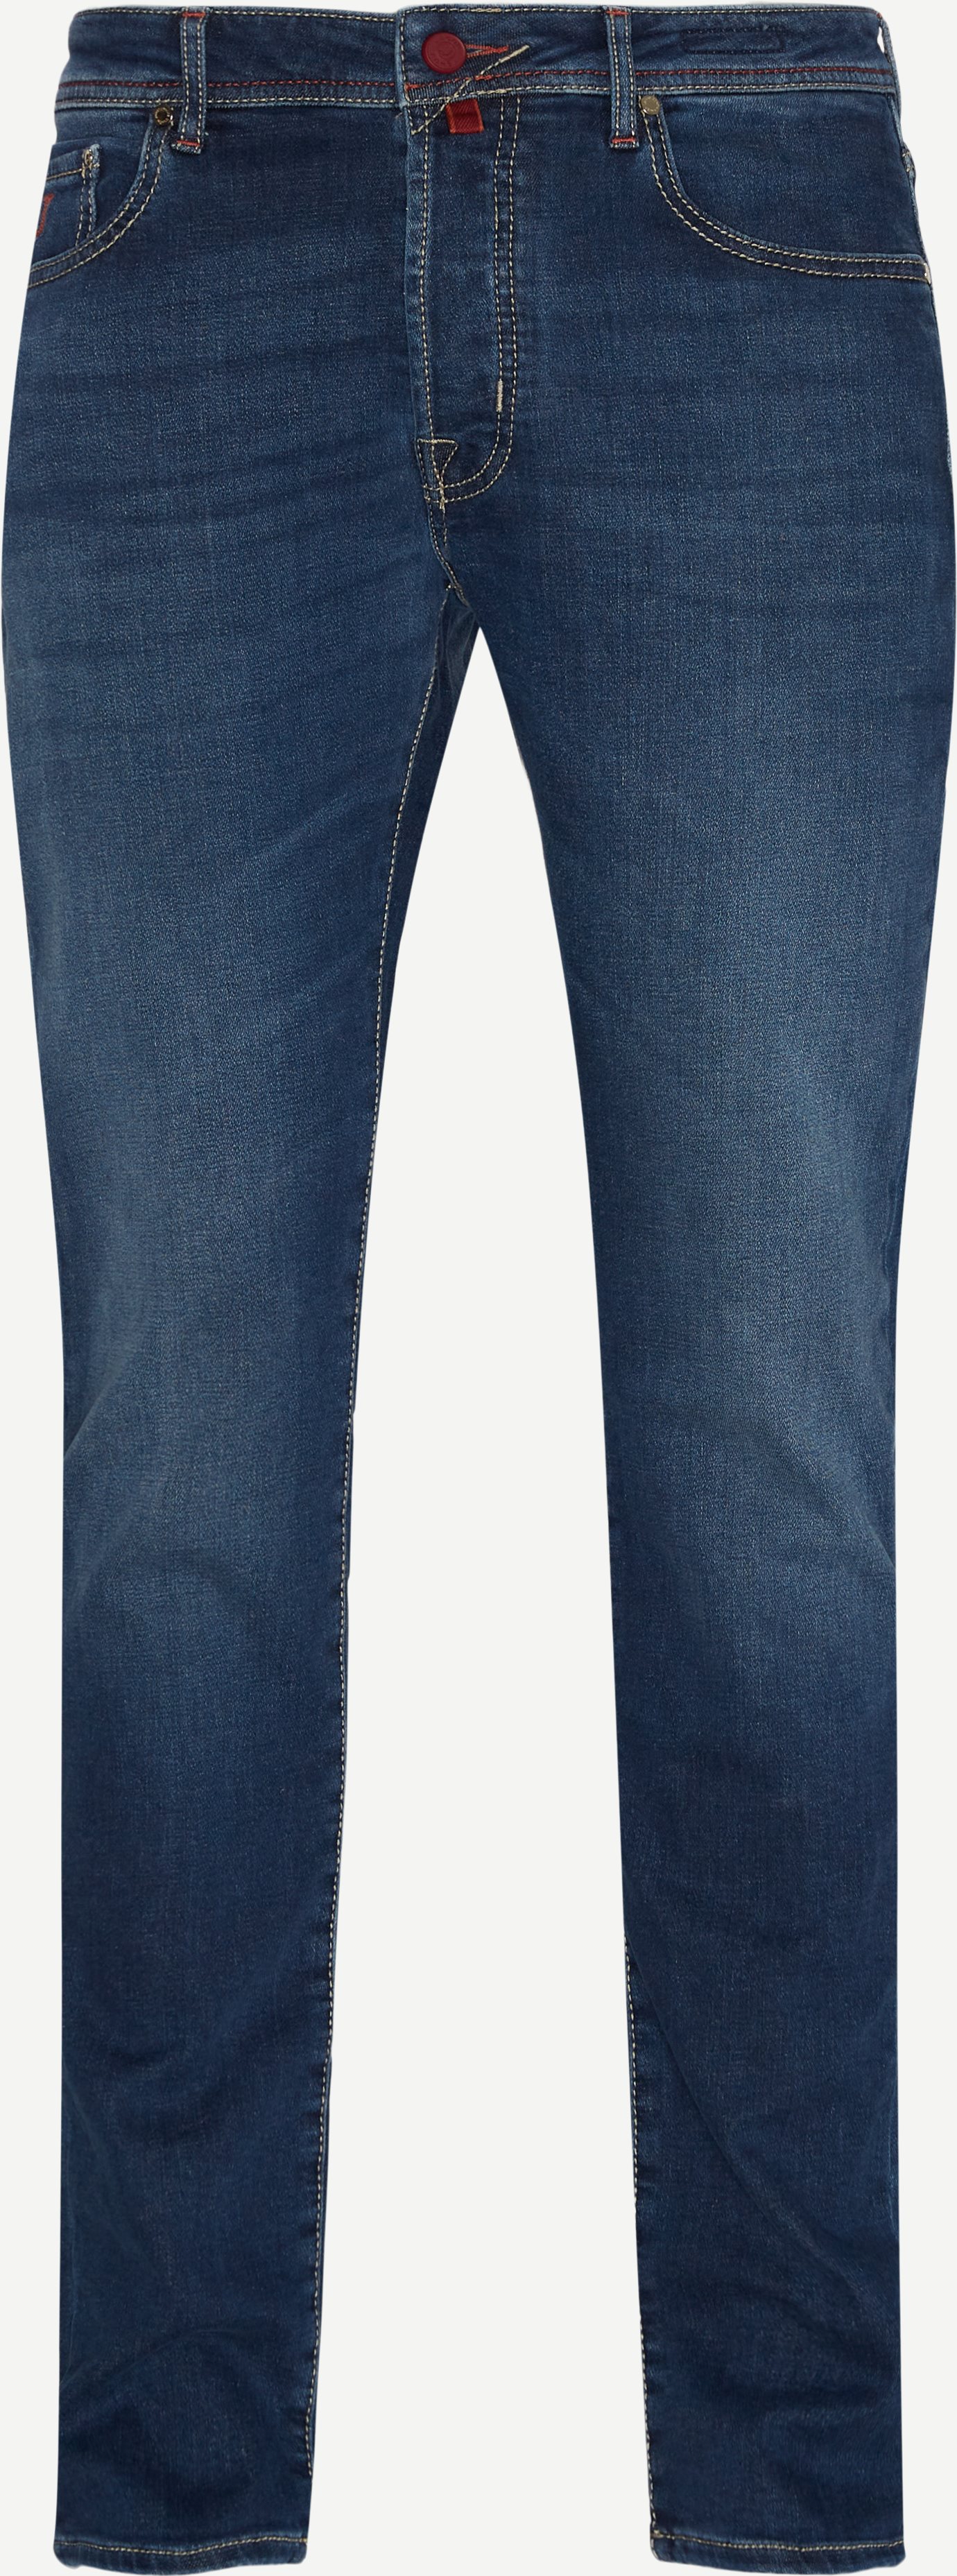 J688 3588 Bard Denim Jeans - Jeans - Slim fit - Denim